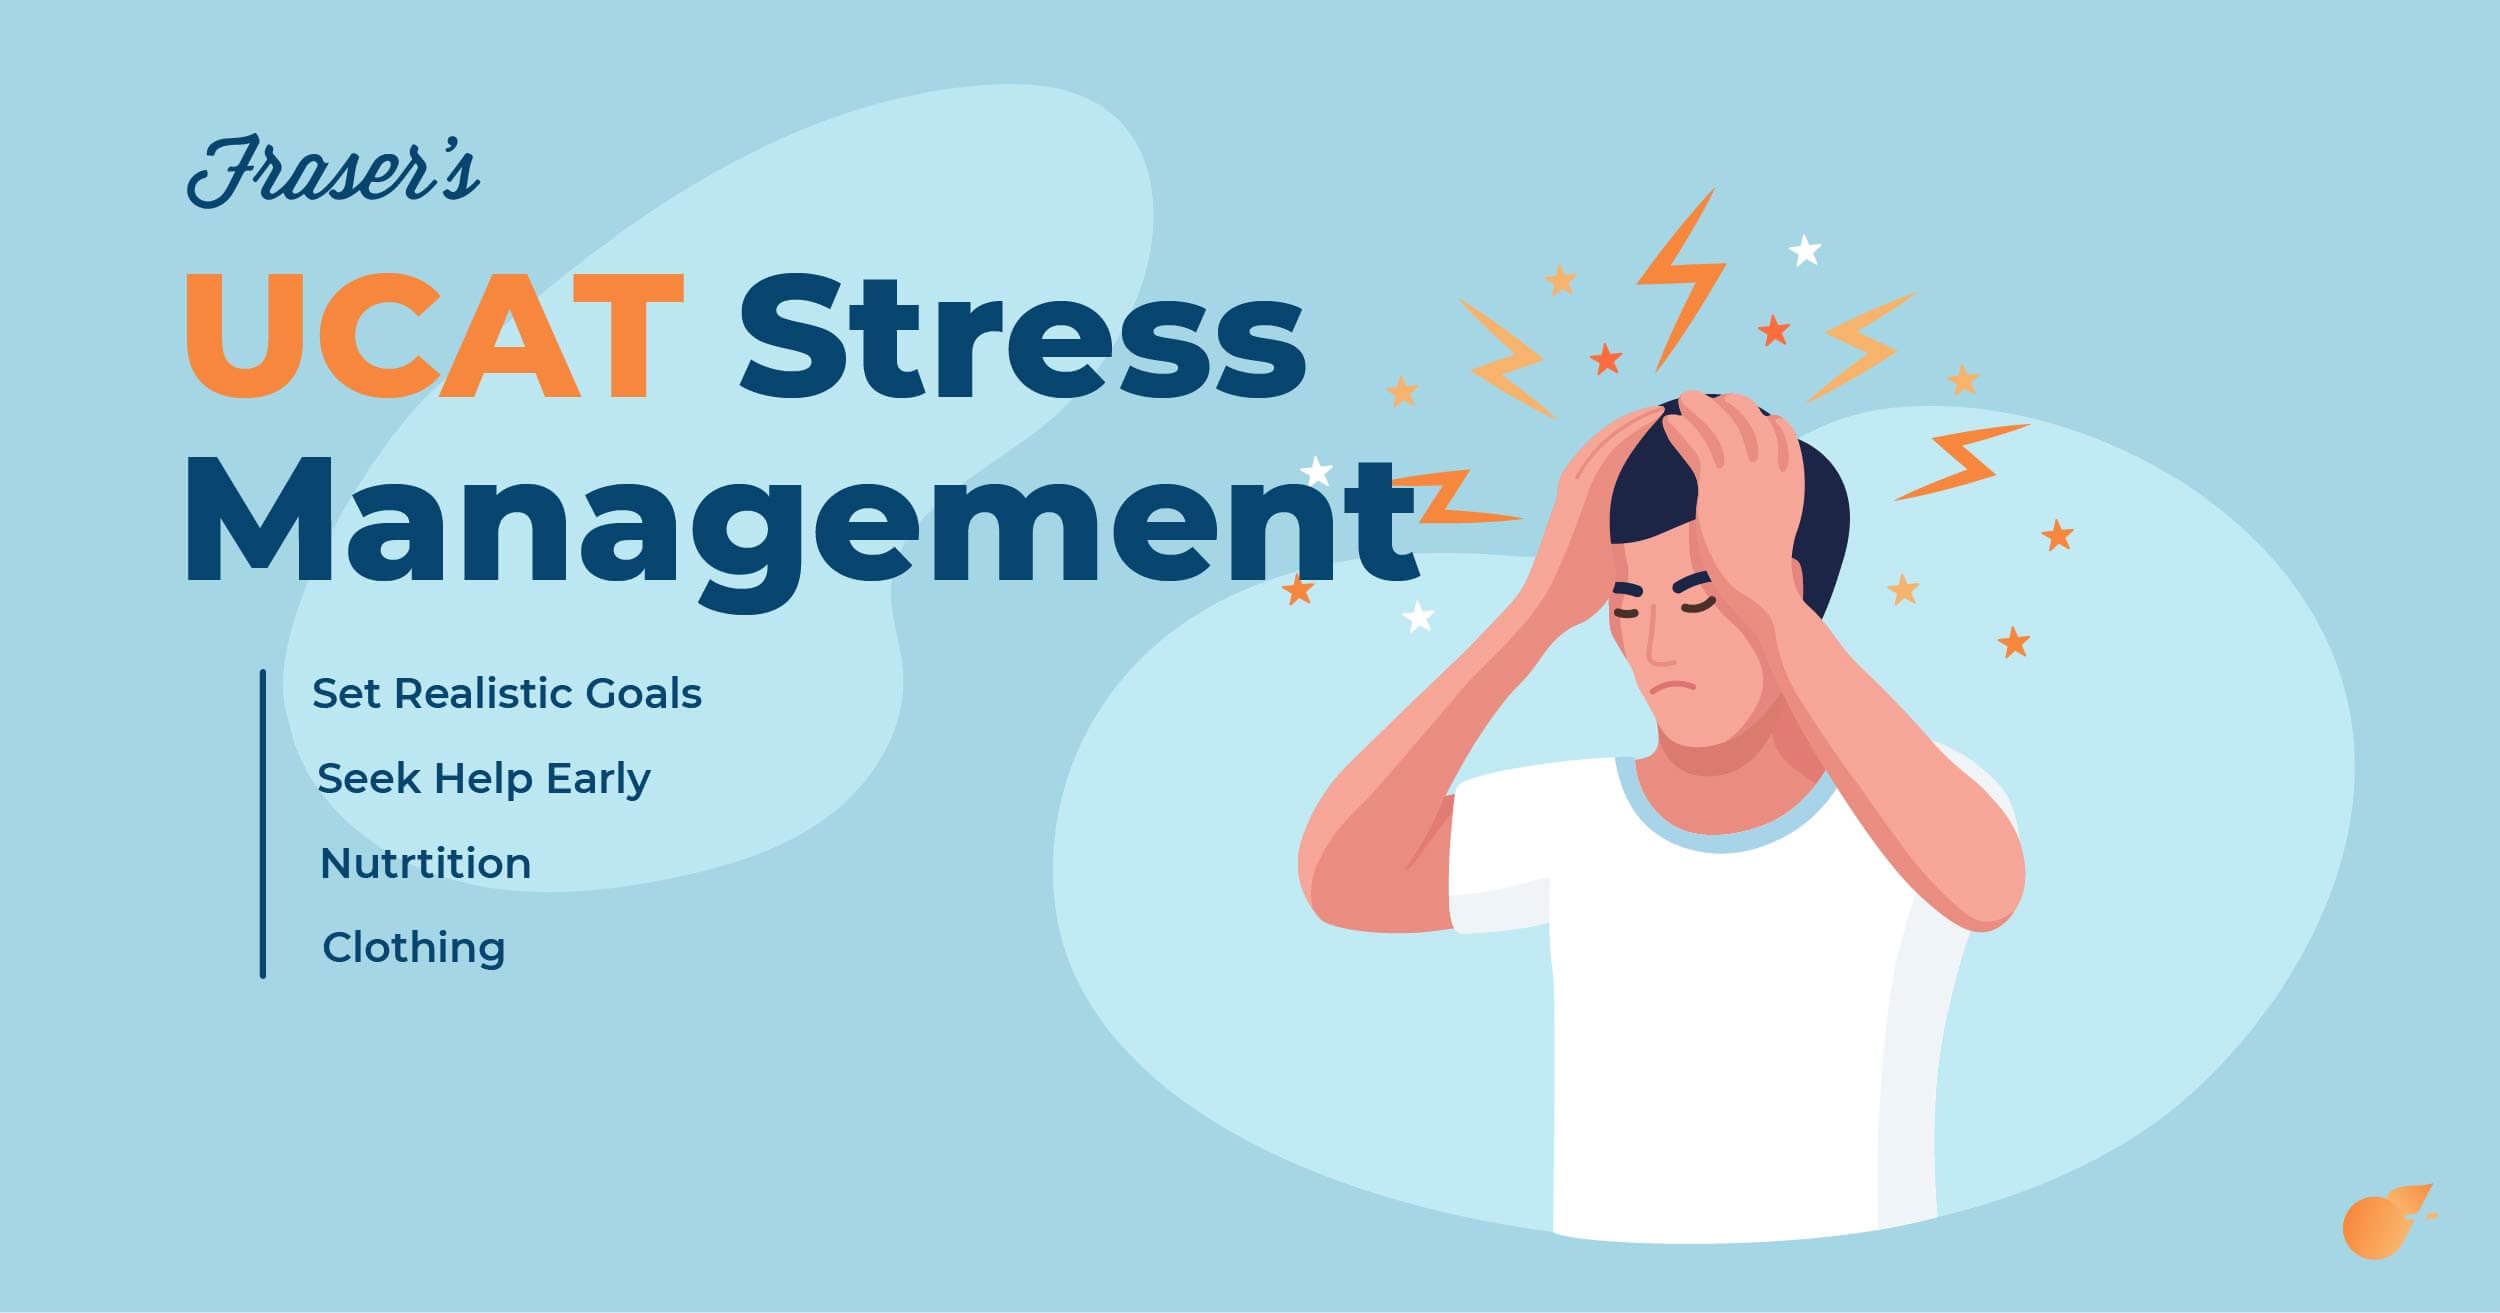 UCAT Stress Management: 6 Ways To Maintain Your UCAT Motivation featured image